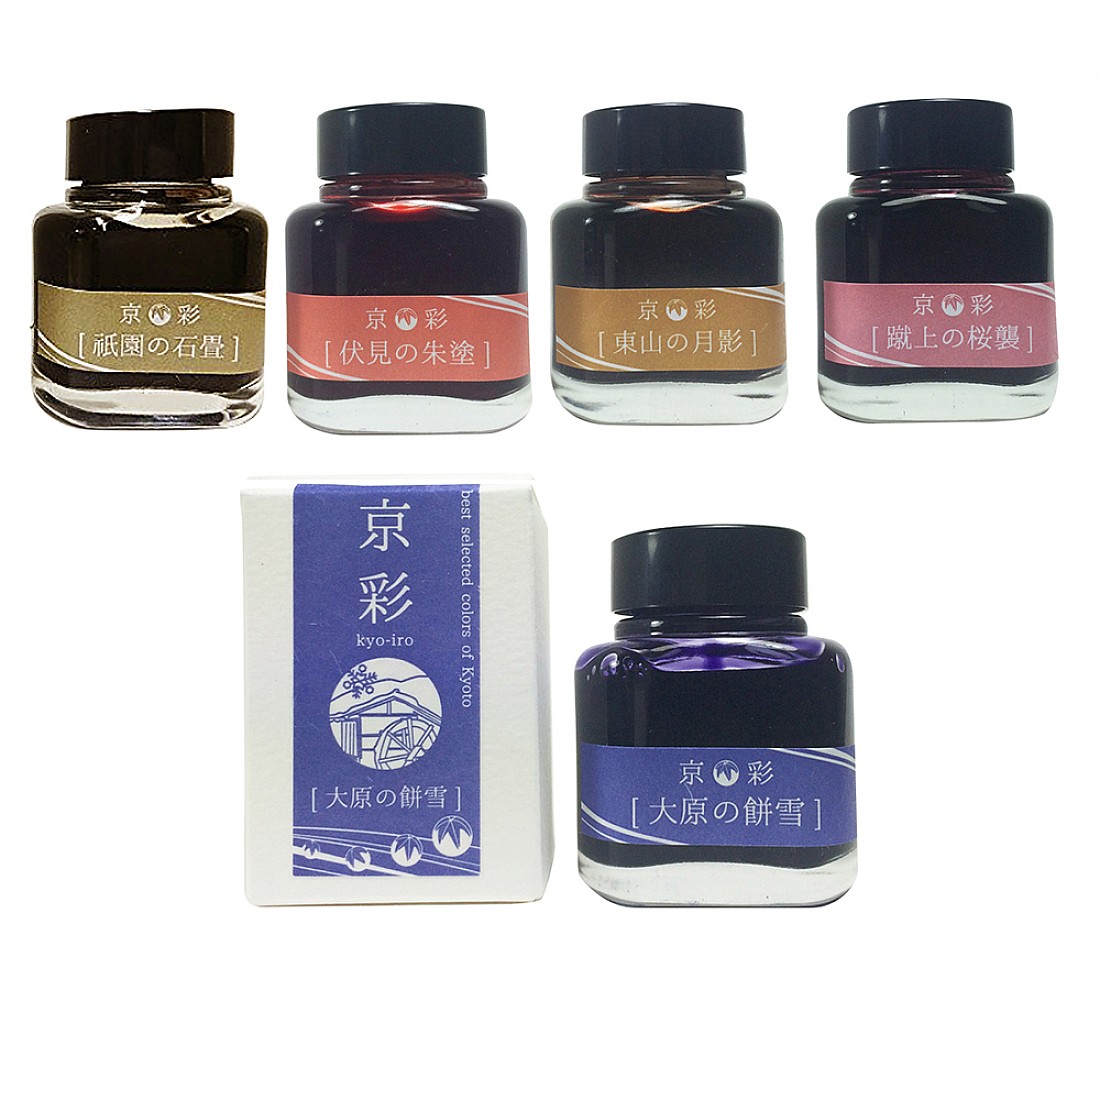 Kyo-iro Ink - Ink Bottles (5 colors)